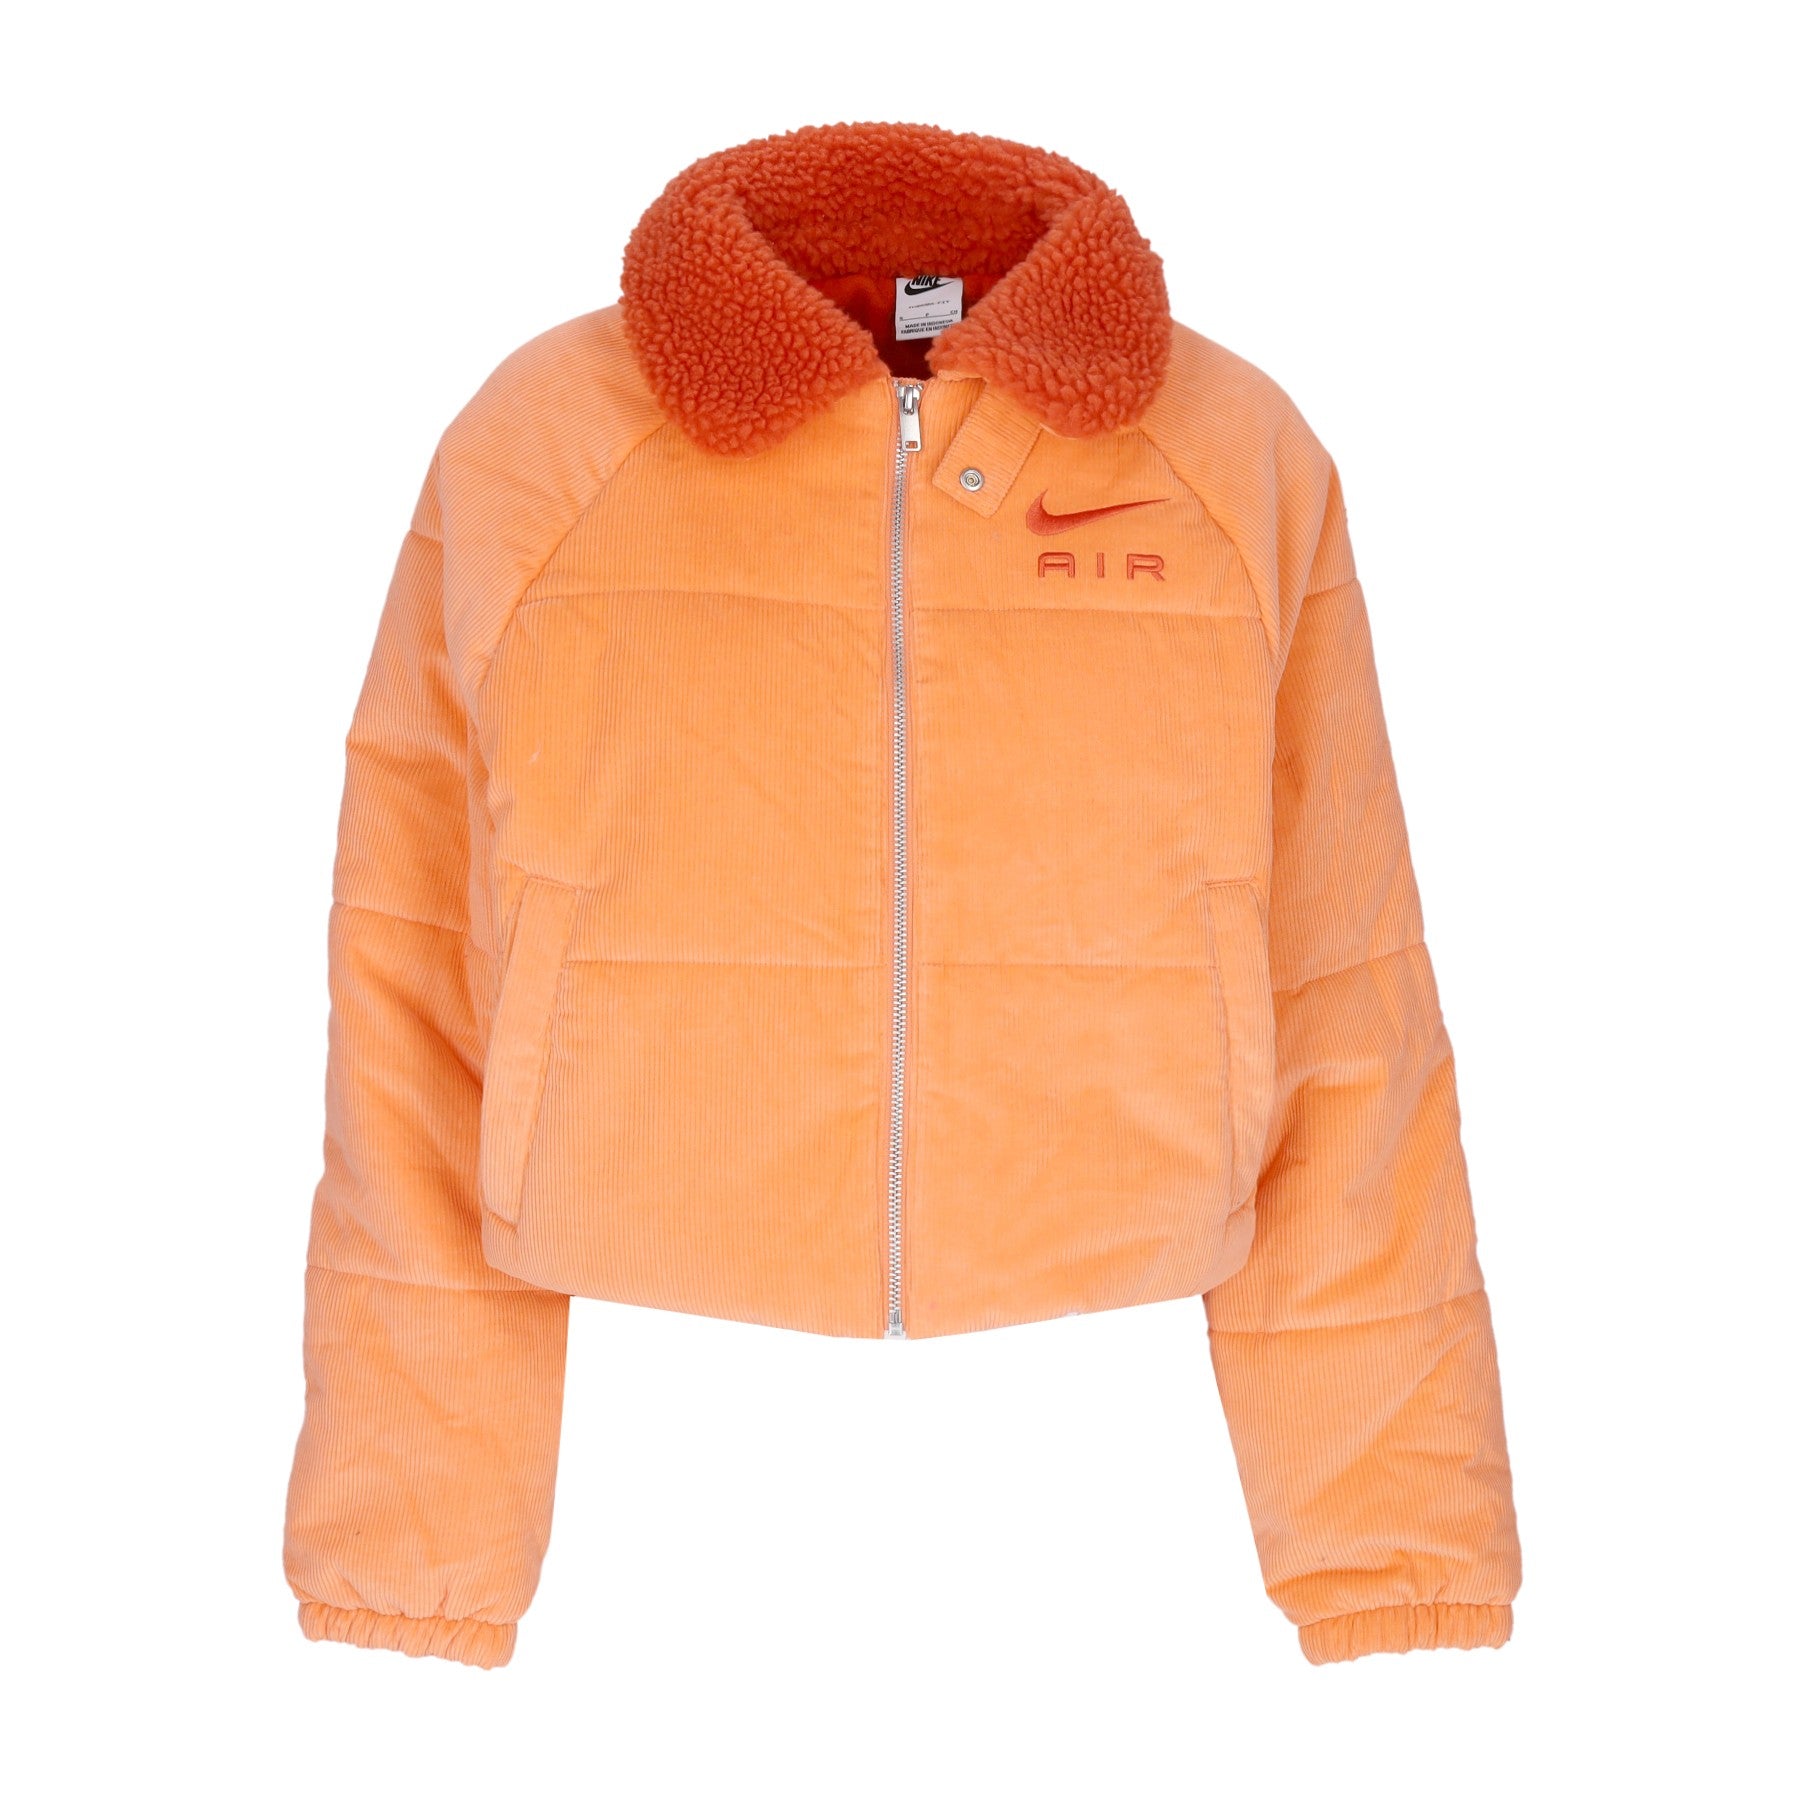 Nike, Giubbotto Corto Donna Sportswear Air Therma-fit Corduroy Winter Jacket, Orange Trance/mantra Orange